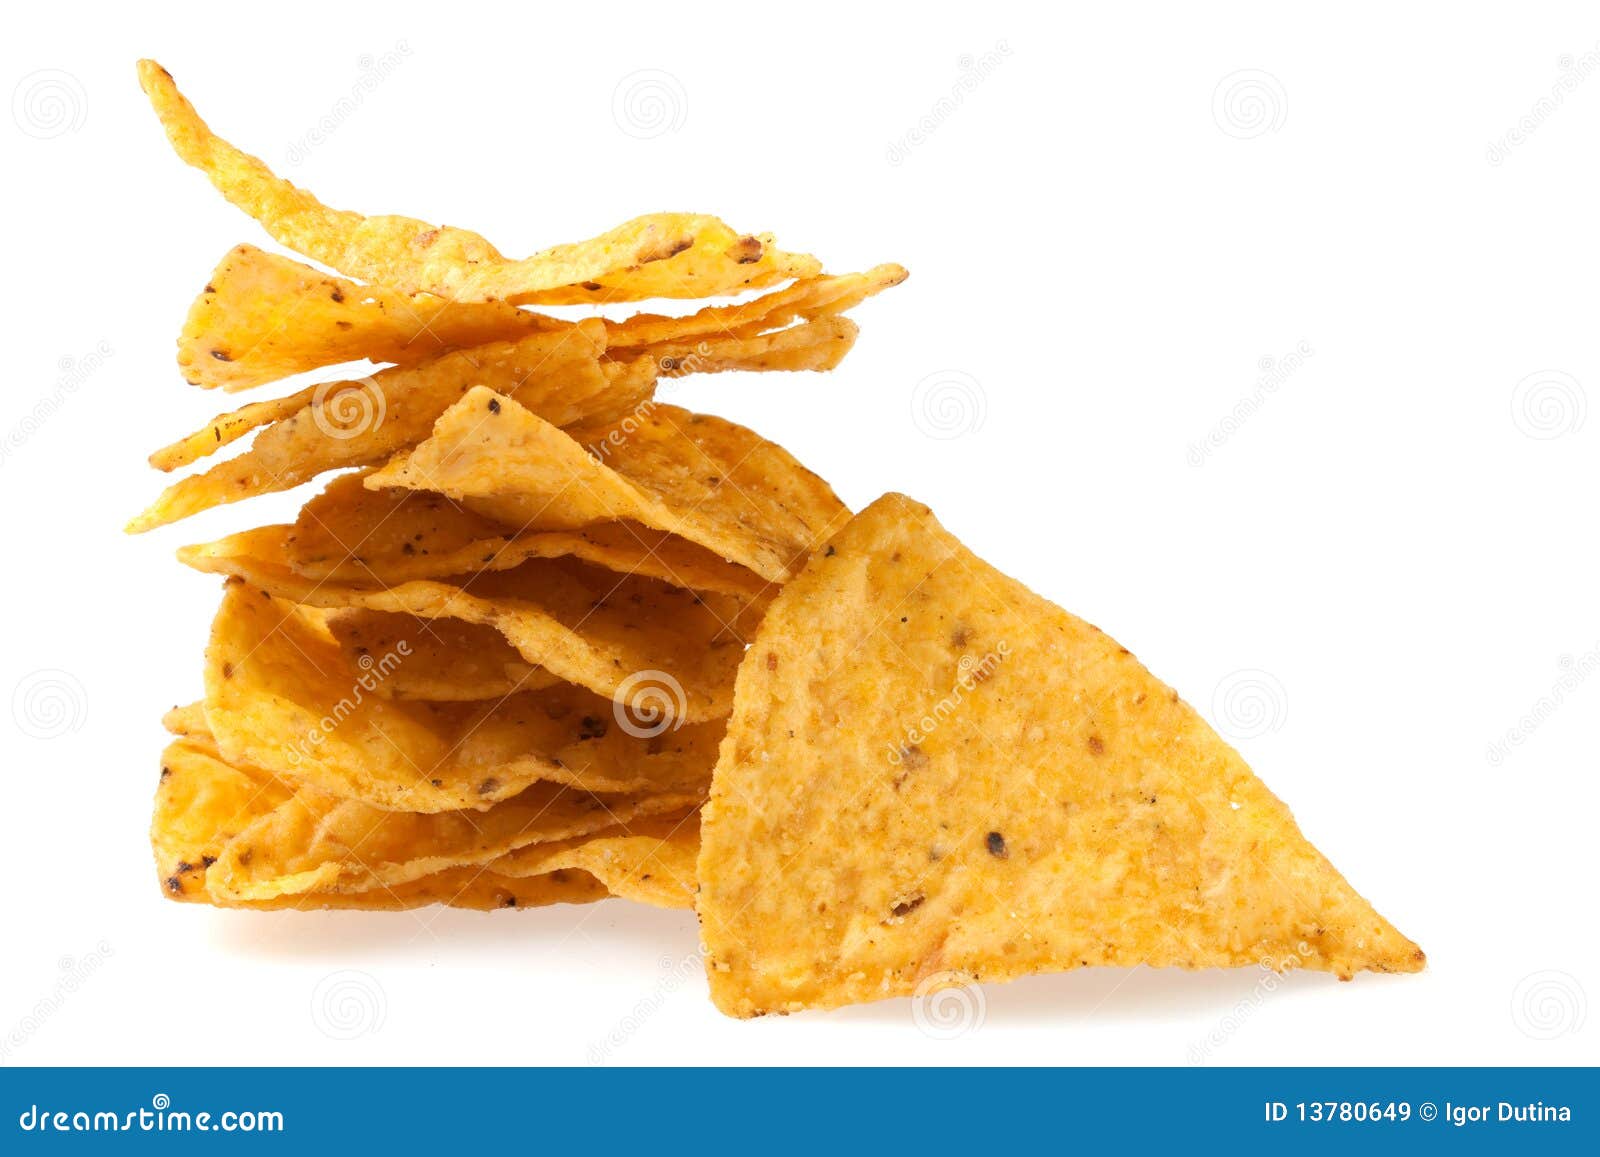 tortilla chips slices